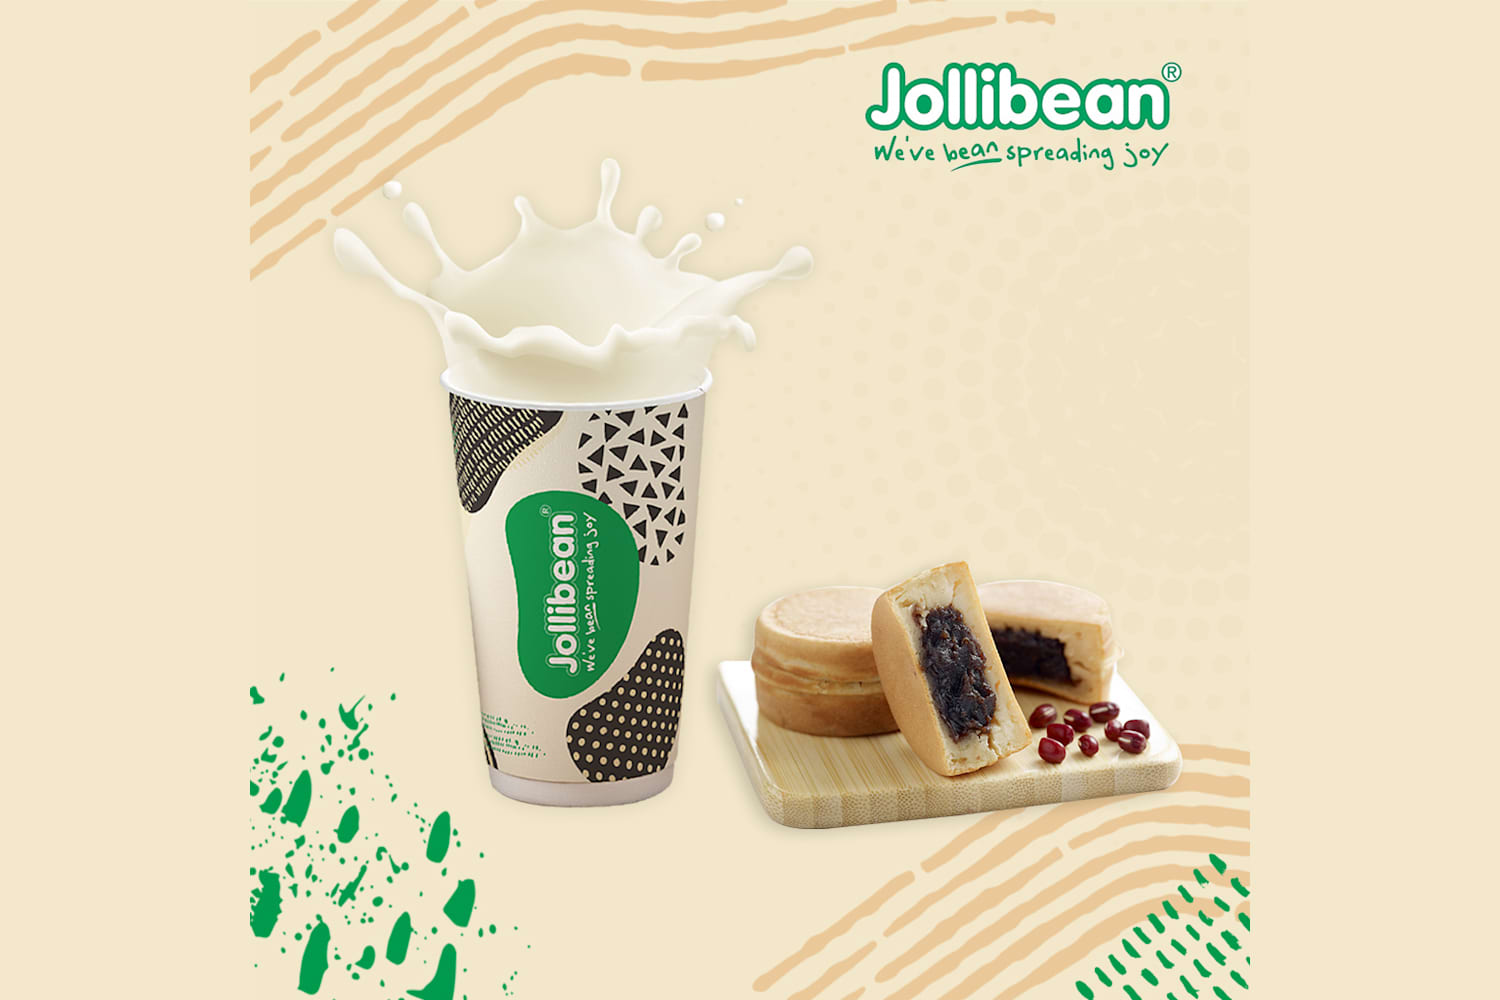 1 x Signature Soy Milk + Maru Pancake Set at Jollibean - Get Deals, Cashback and Rewards with ShopBack GO